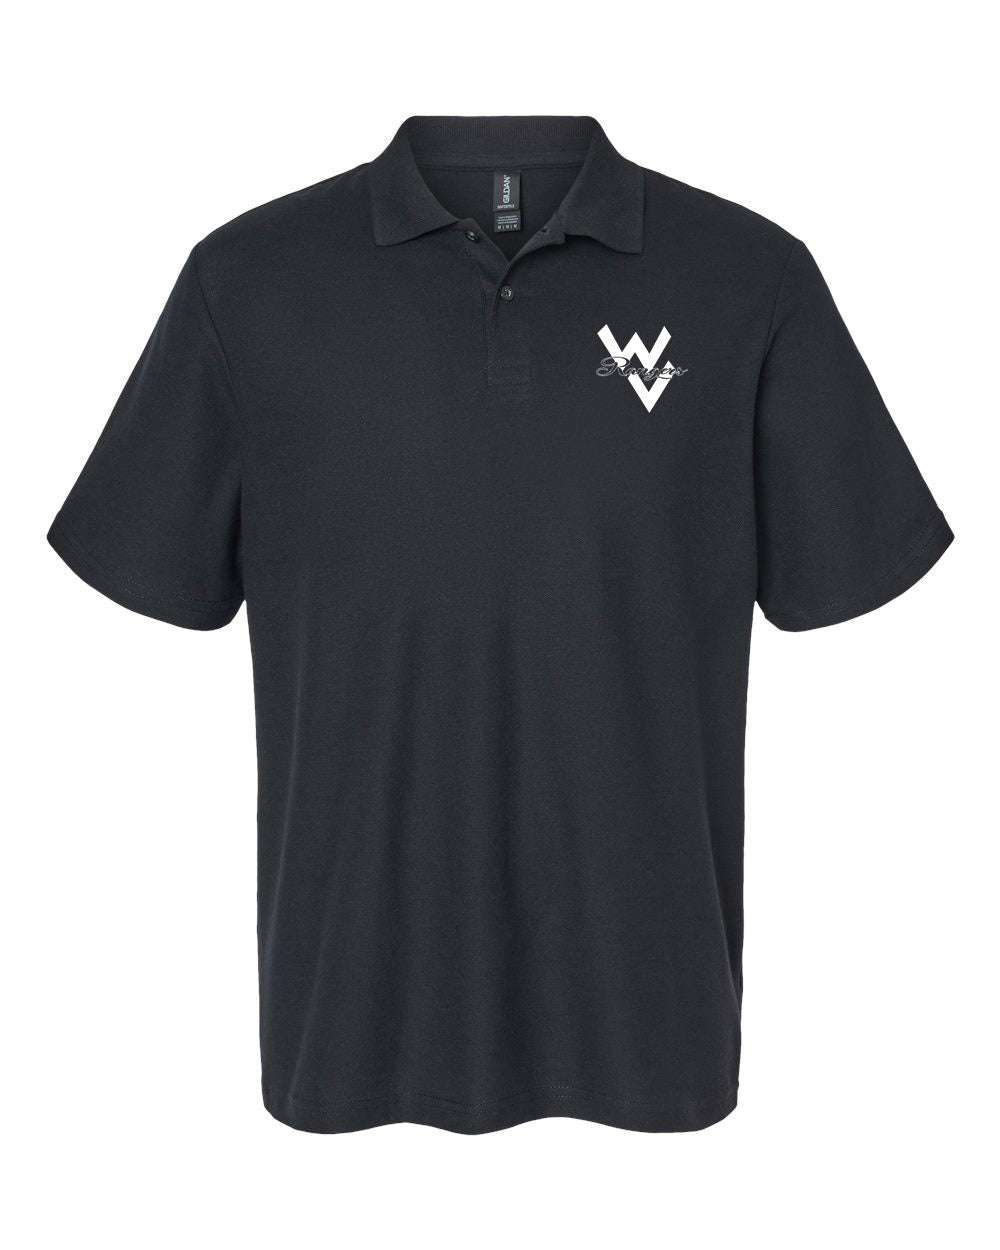 Wallkill Cheer Design 1 Polo T-Shirt